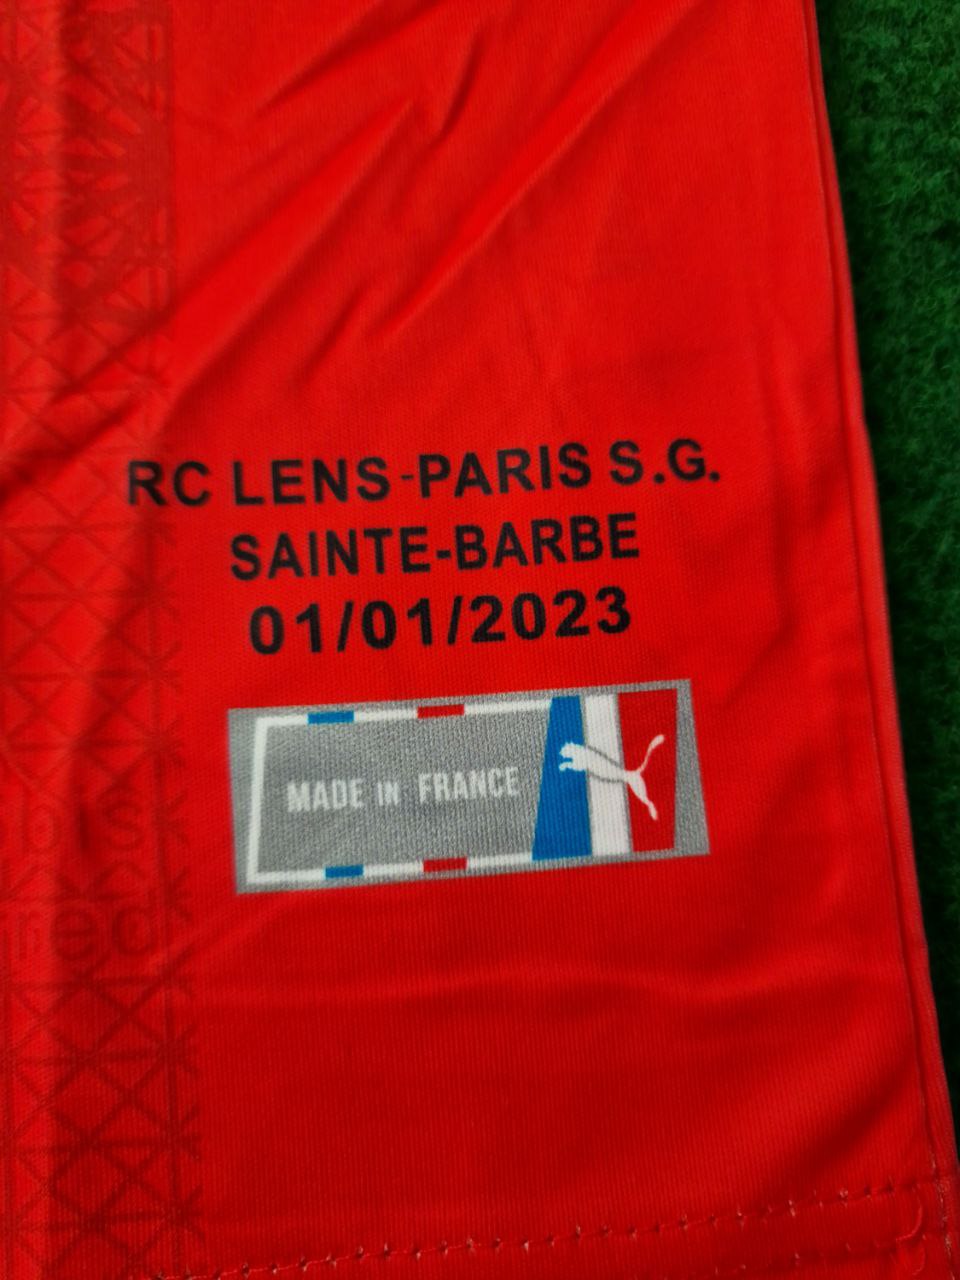 Lens Commemorative Saint Barbe Edition Jersey